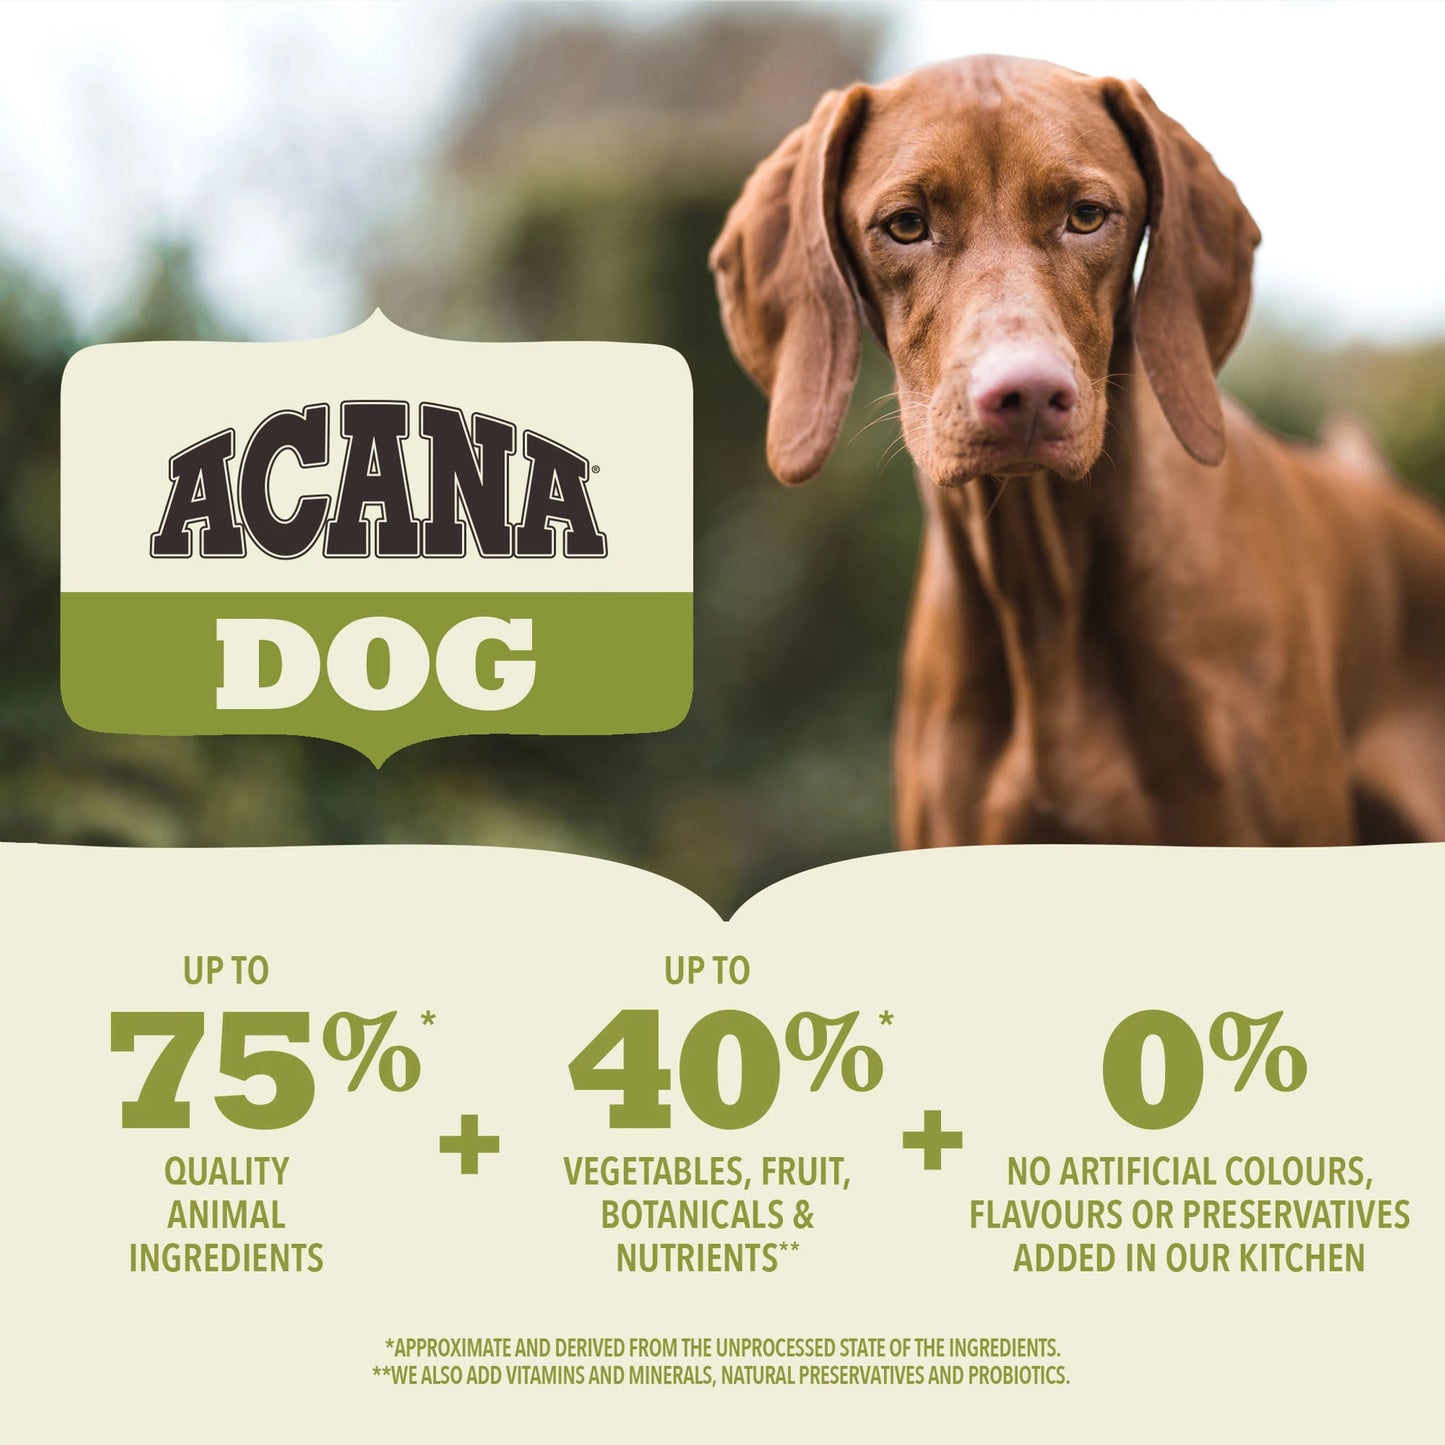 Acana Senior Dry Dog Food Recipe  Dog Food  | PetMax Canada